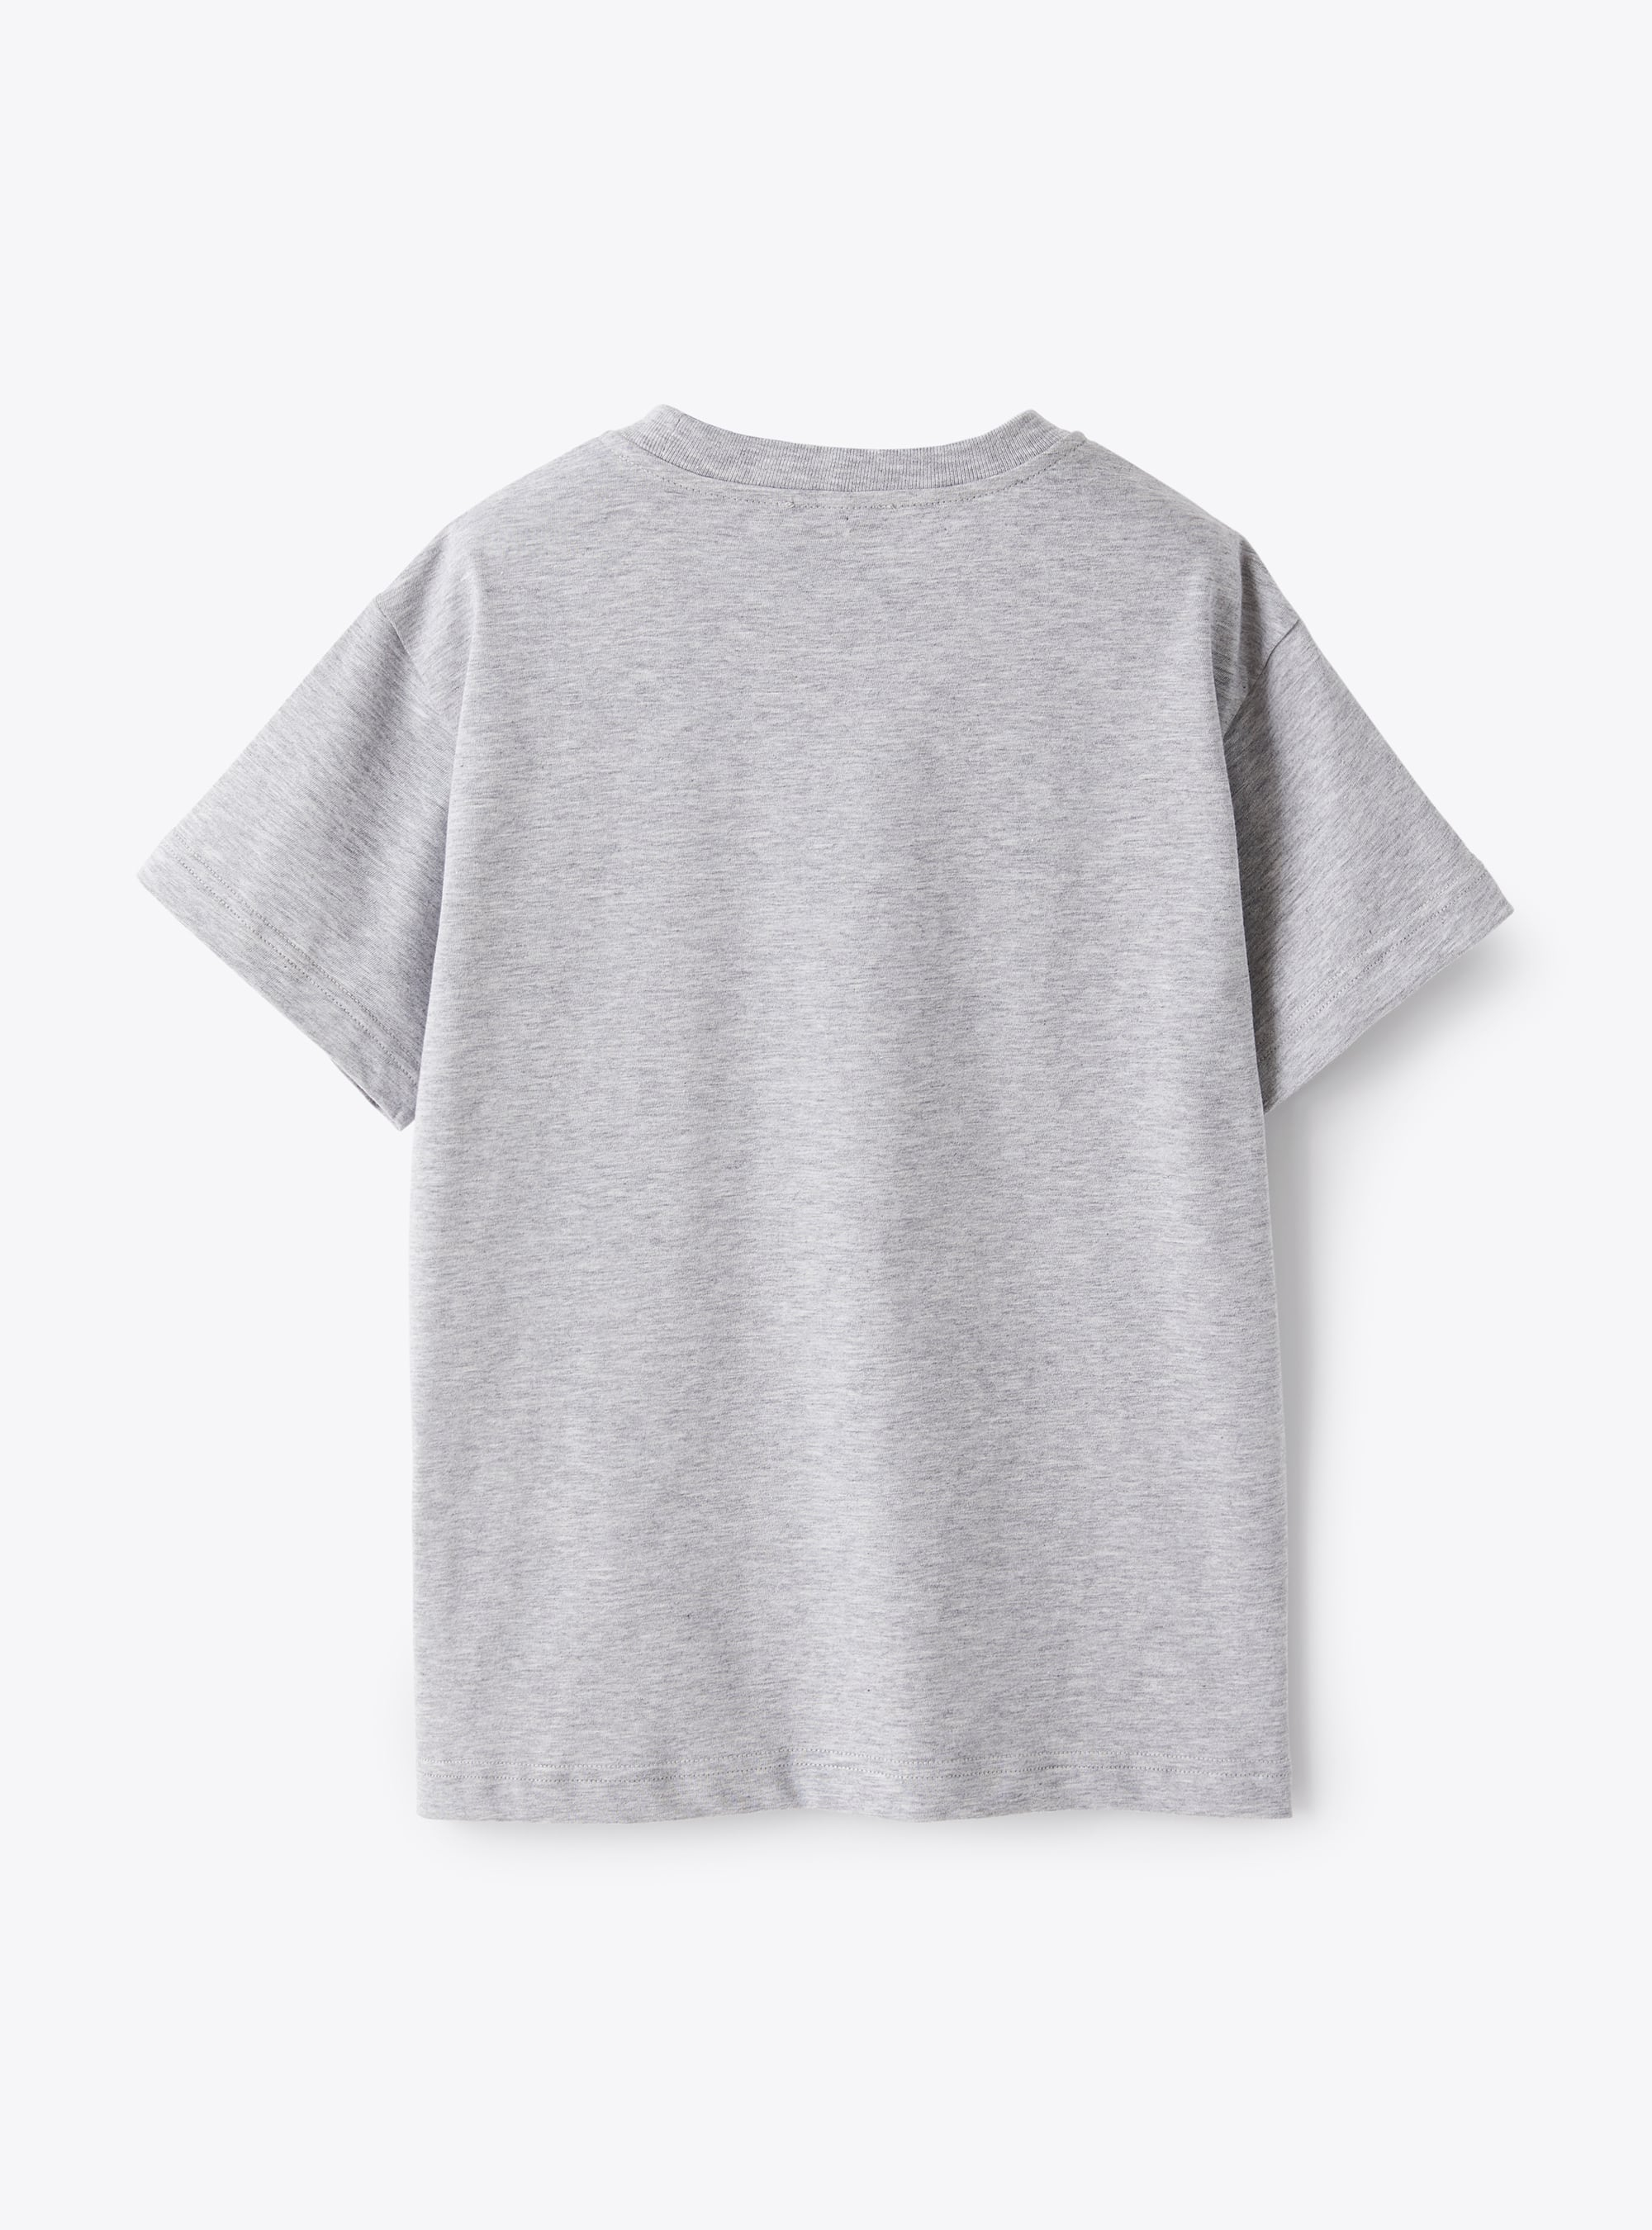 T-shirt in marled-grey cotton jersey - Grey | Il Gufo